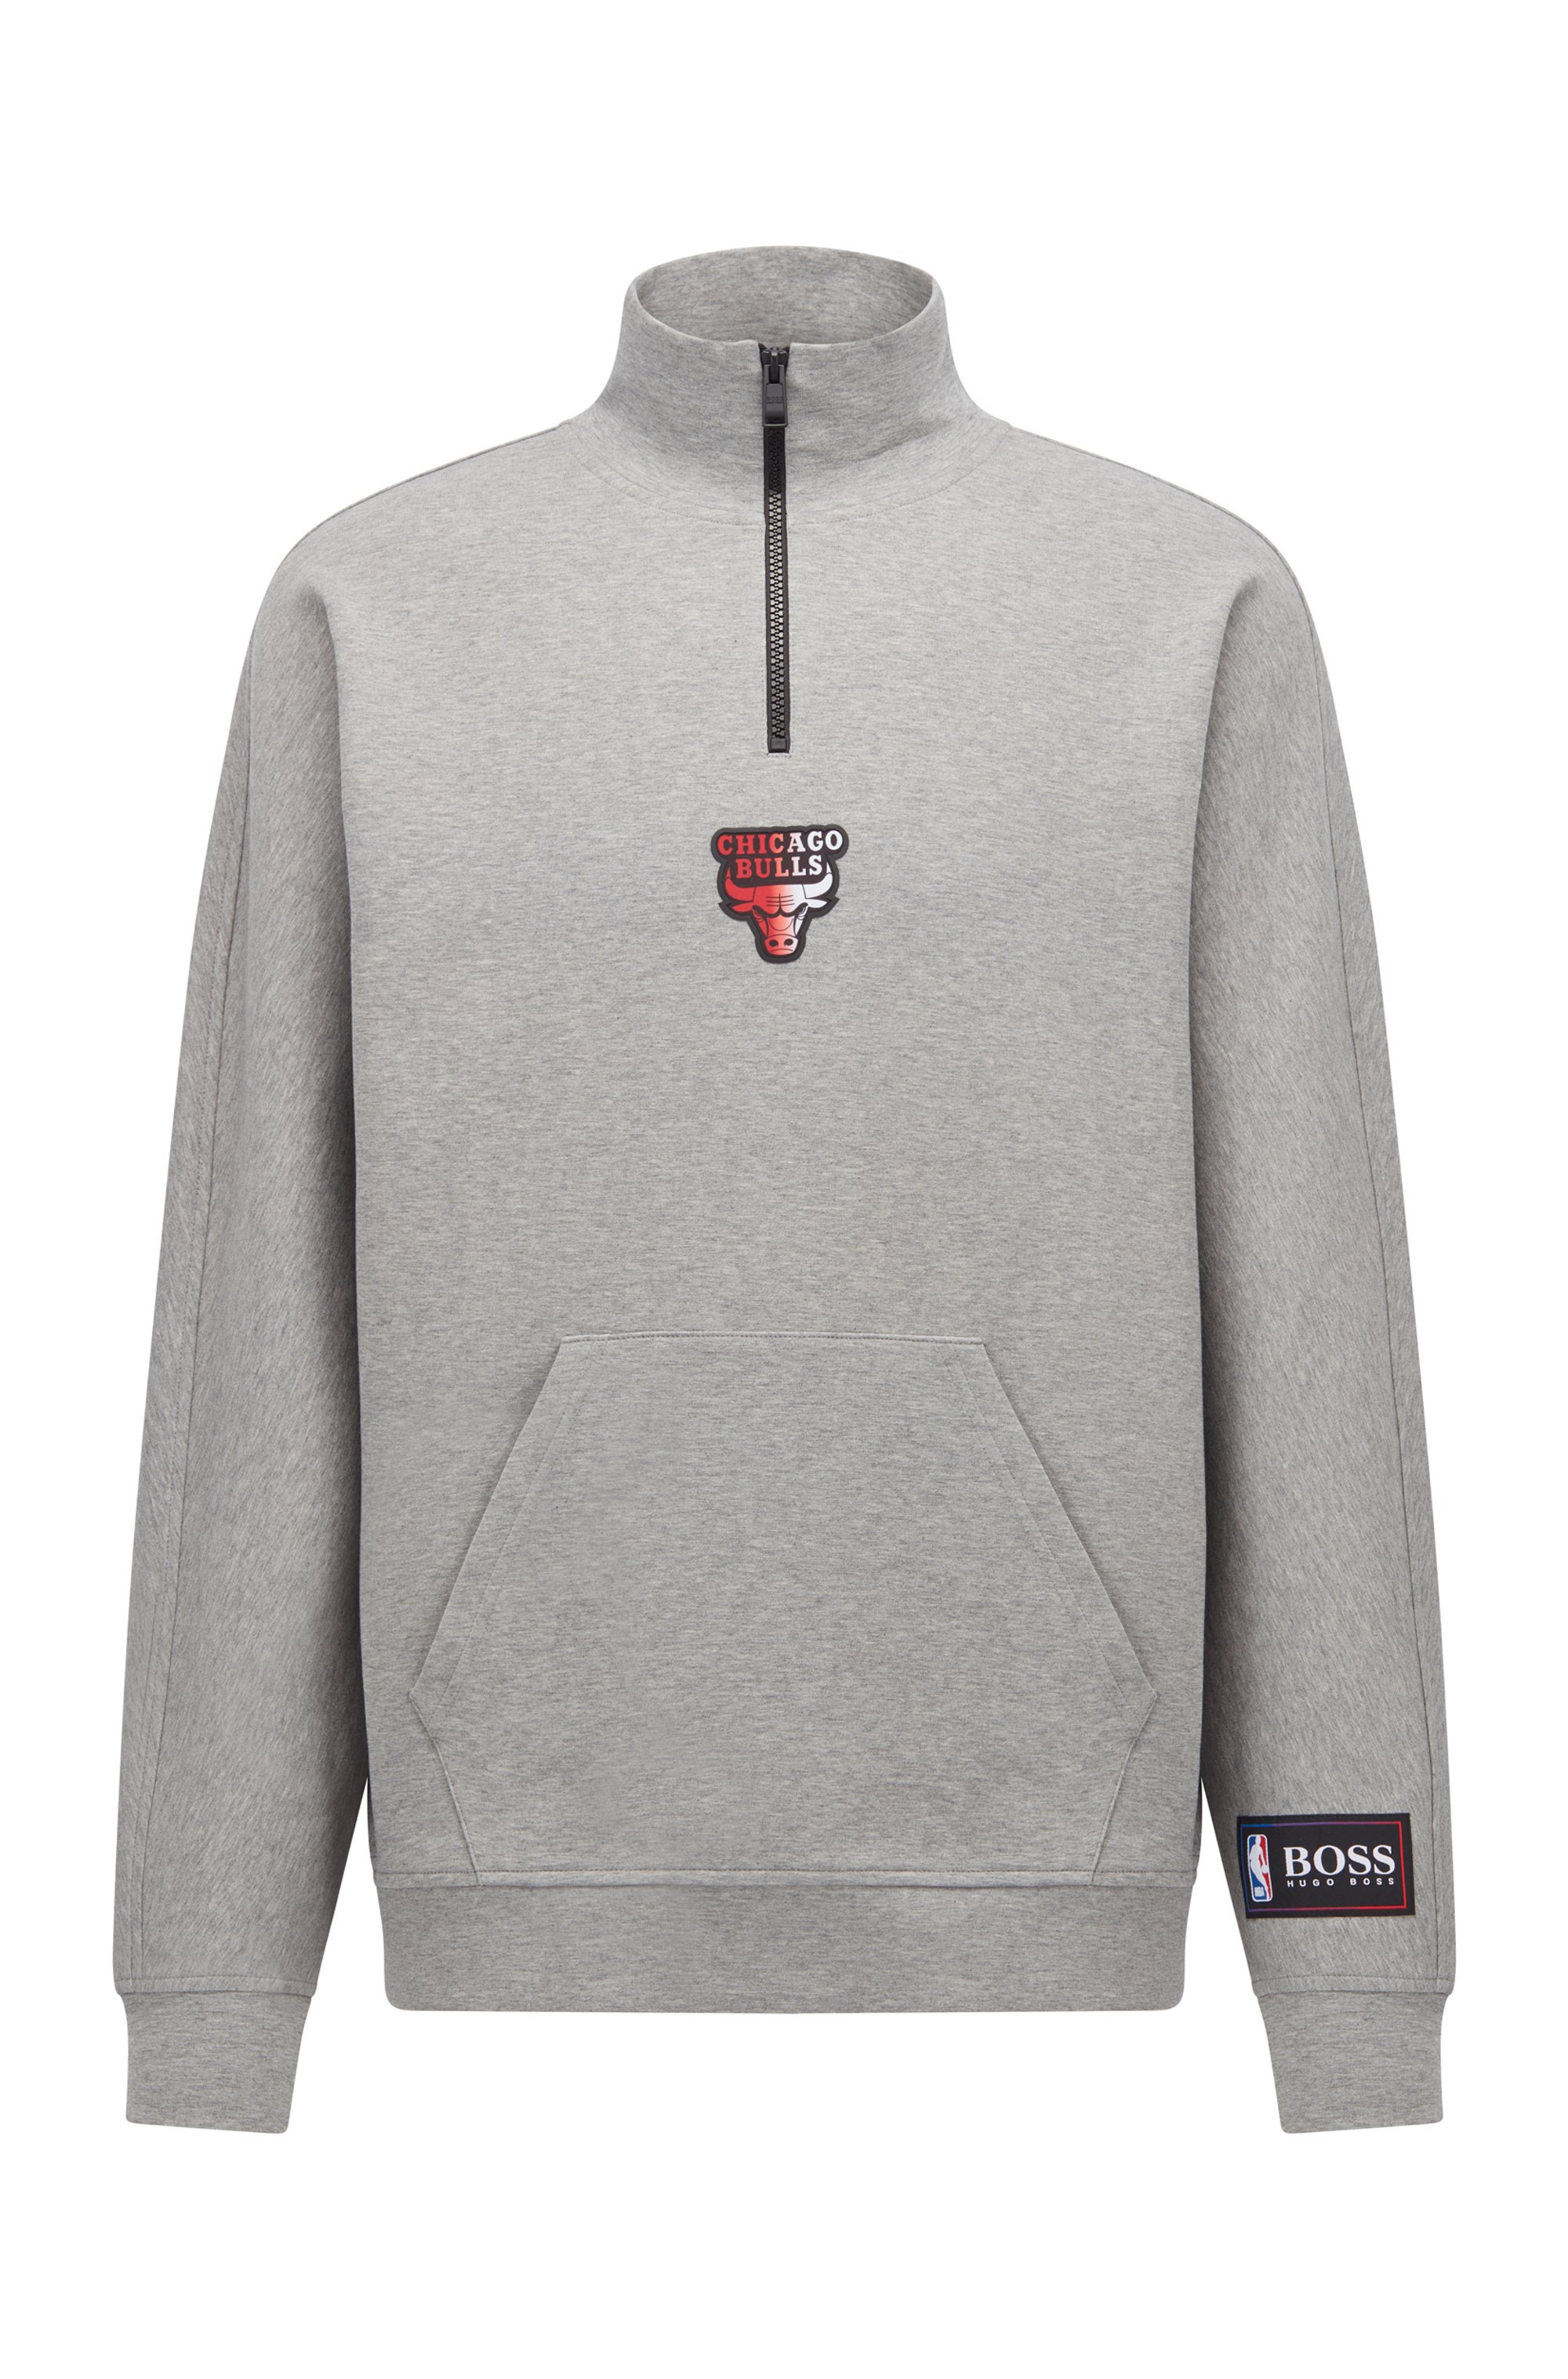 BOSS x NBA zip-neck sweatshirt with collaborative branding, NBA Bulls